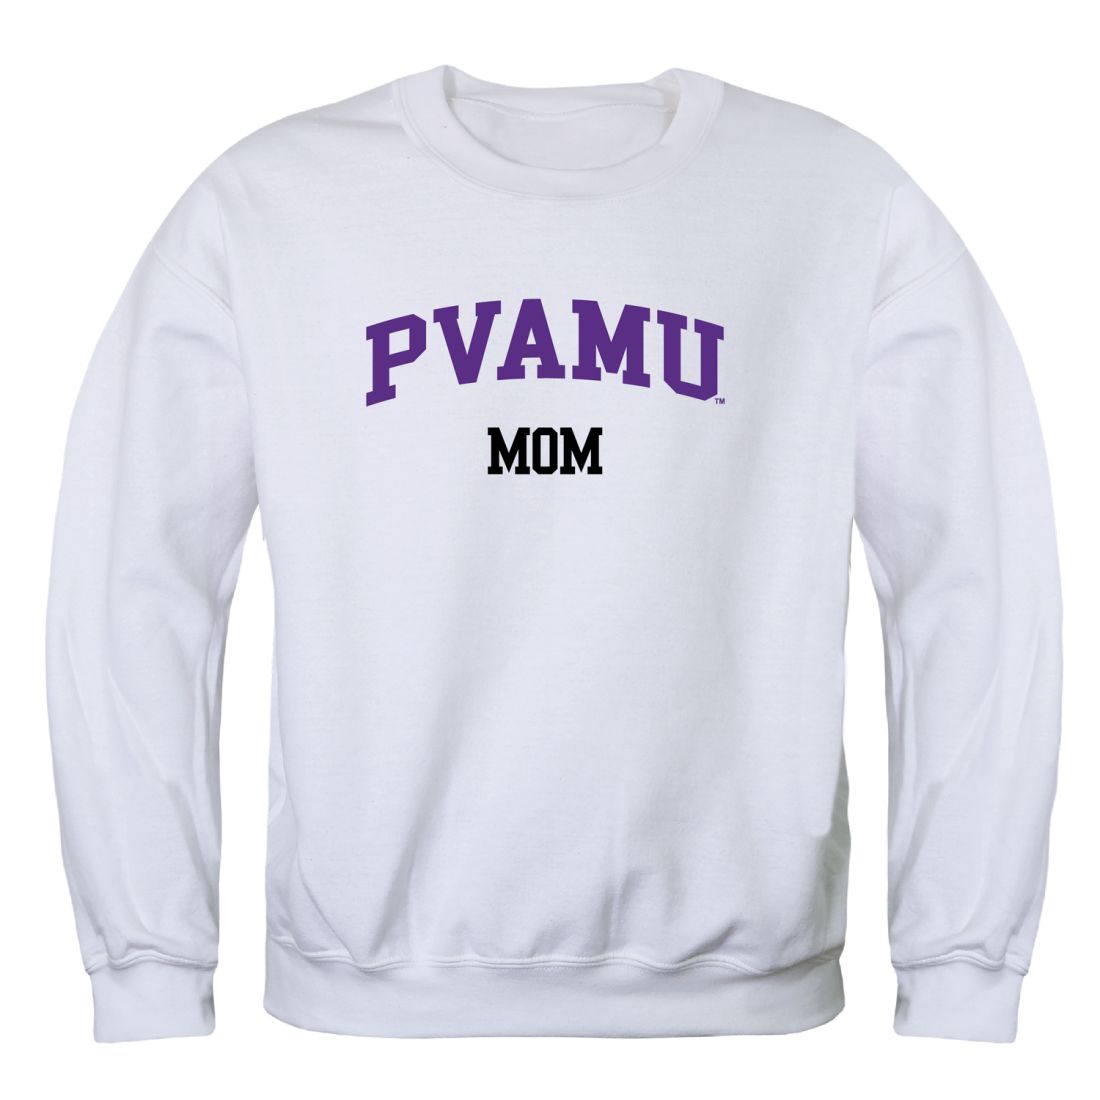 Prairie View A&M University Panthers Mom Crewneck Sweatshirt